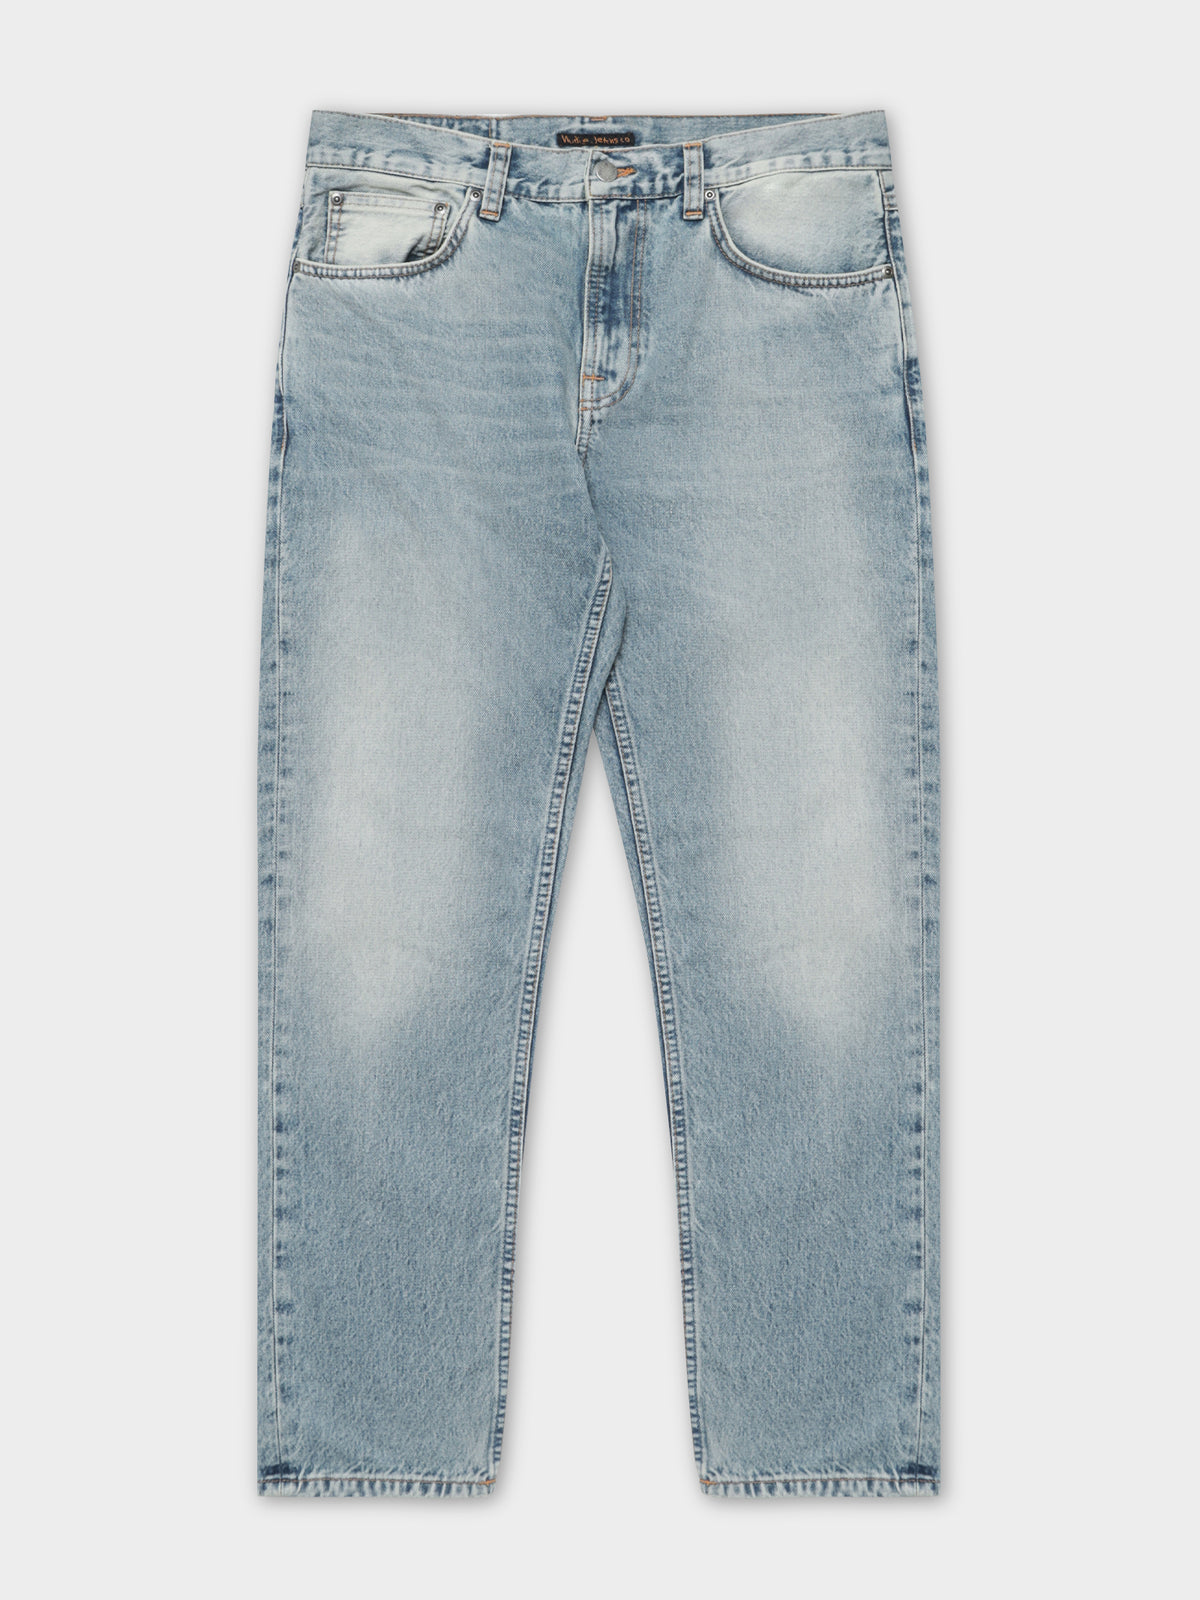 Gritty Jackson Jeans in Denim